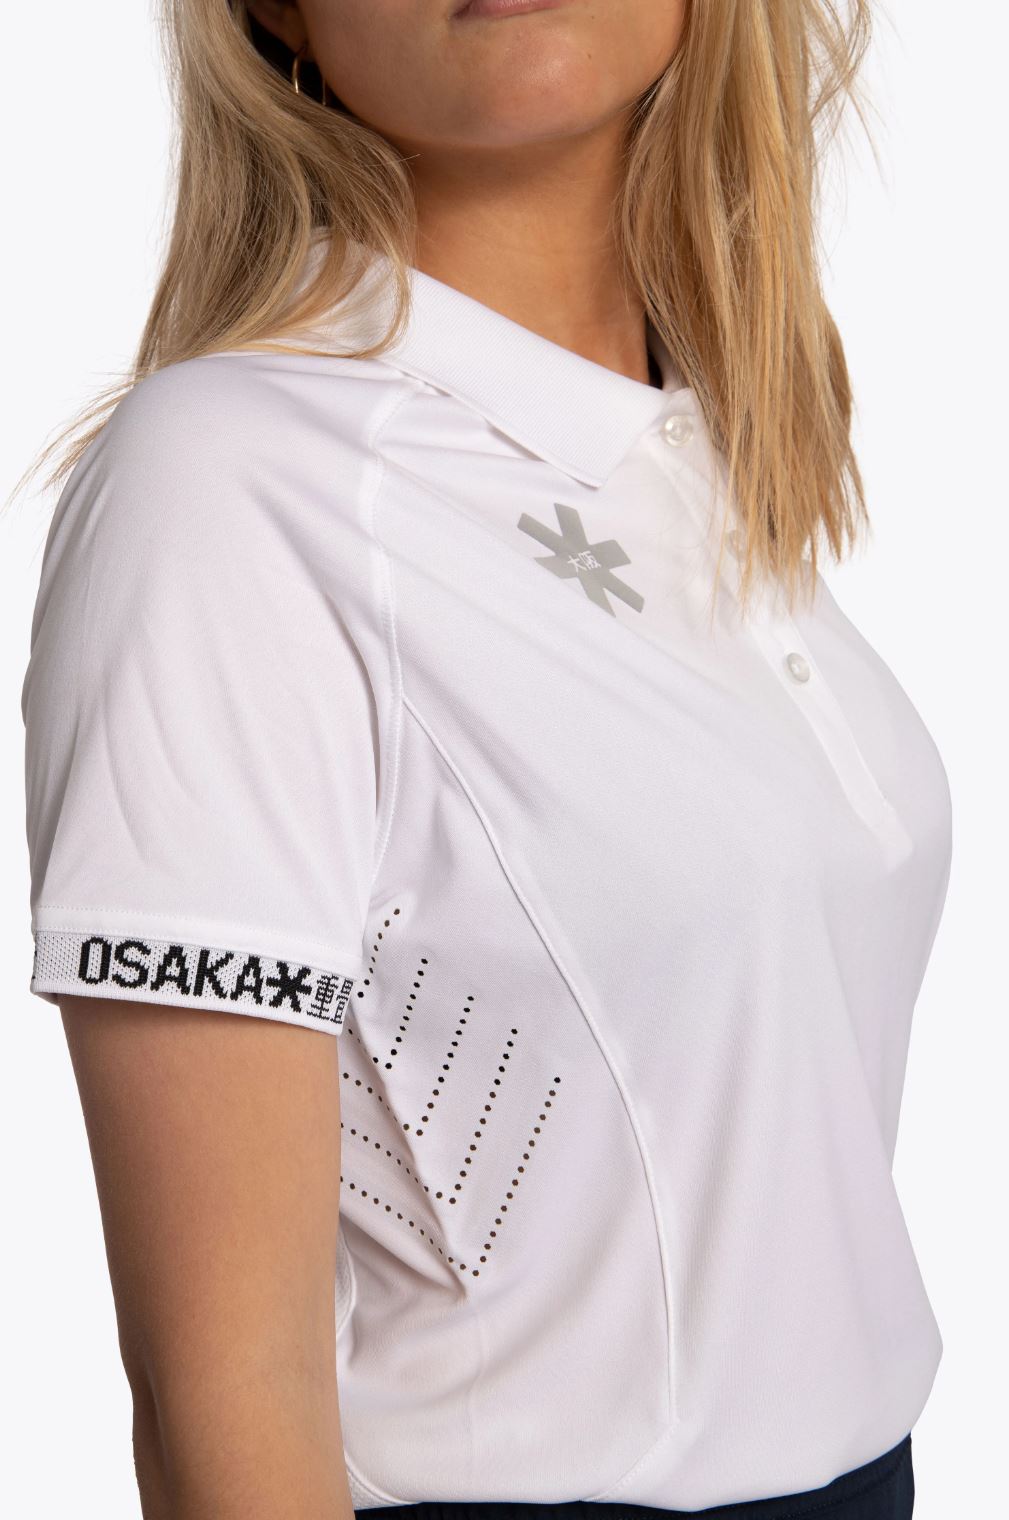 Osaka Women's Polo Jersey (White)